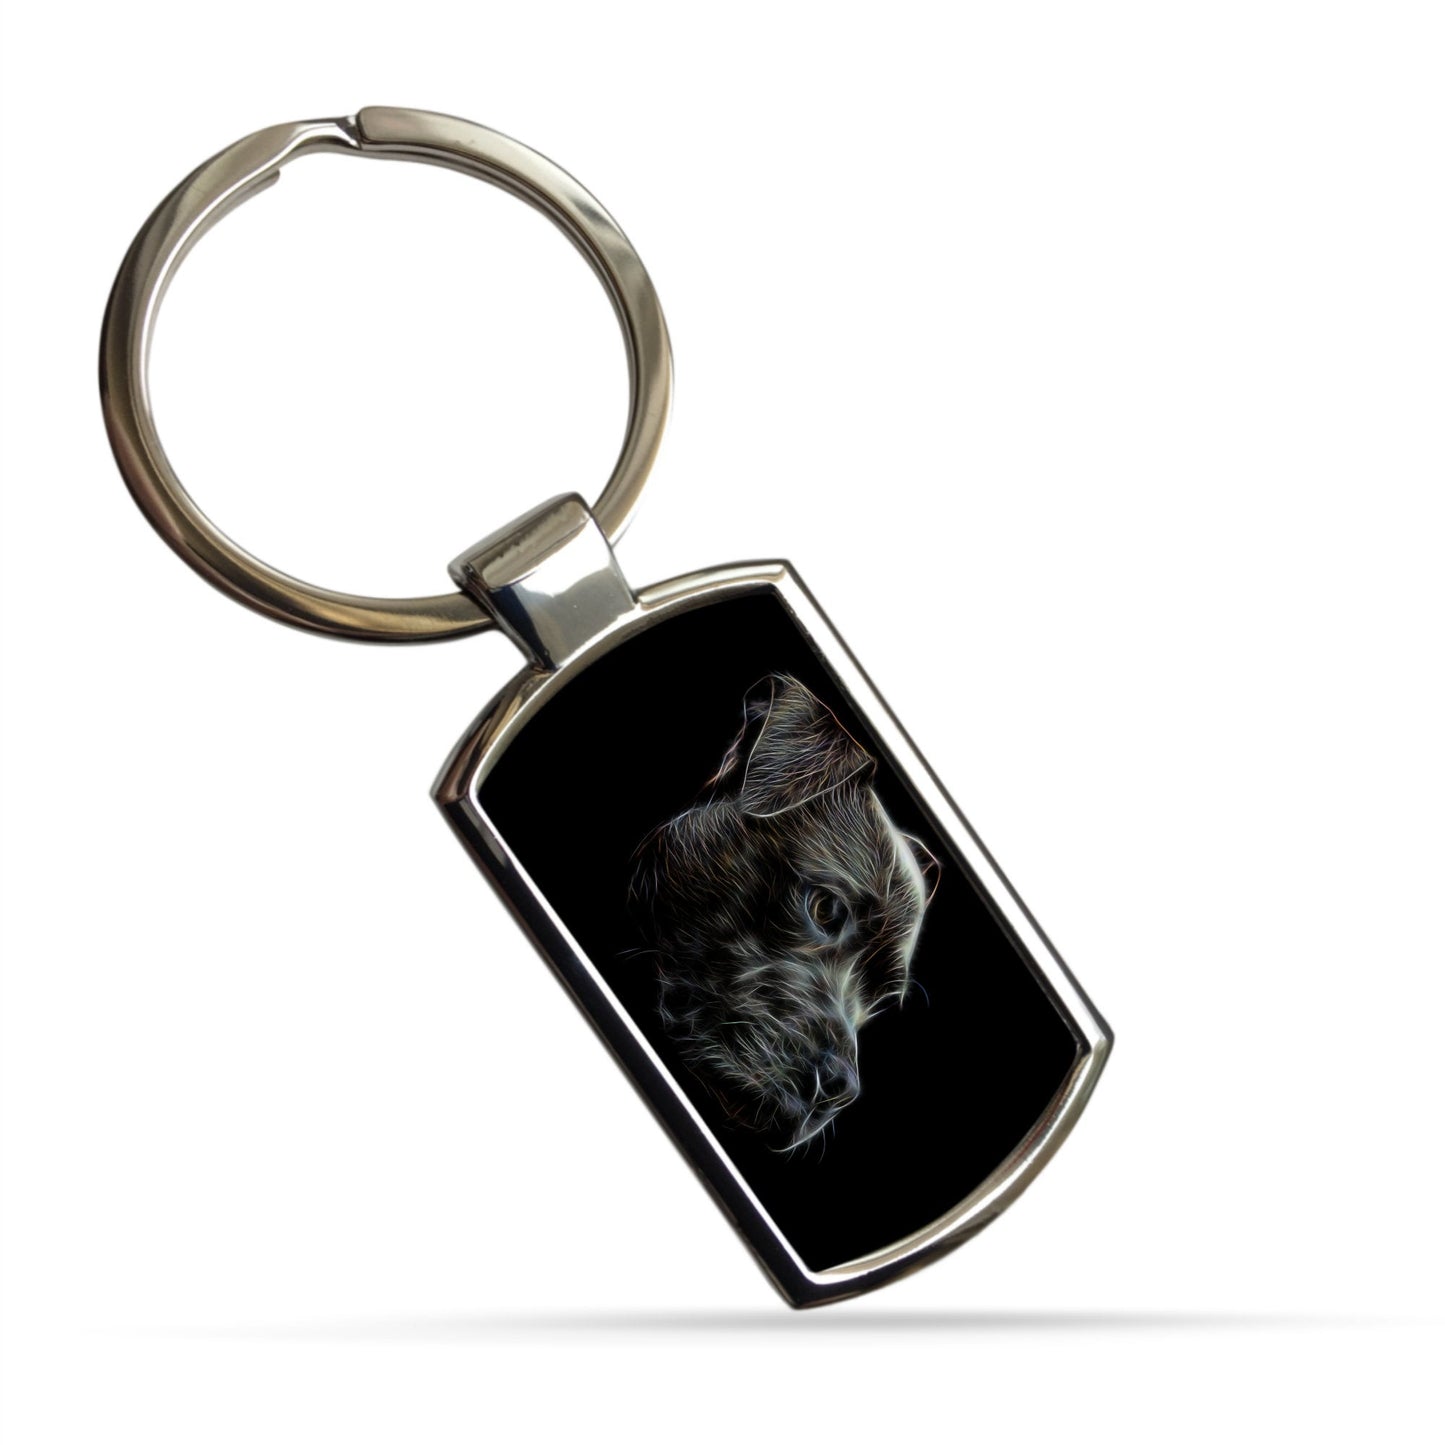 Black Staffordshire Bull Terrier Metal Keychain with Fractal Art Design.